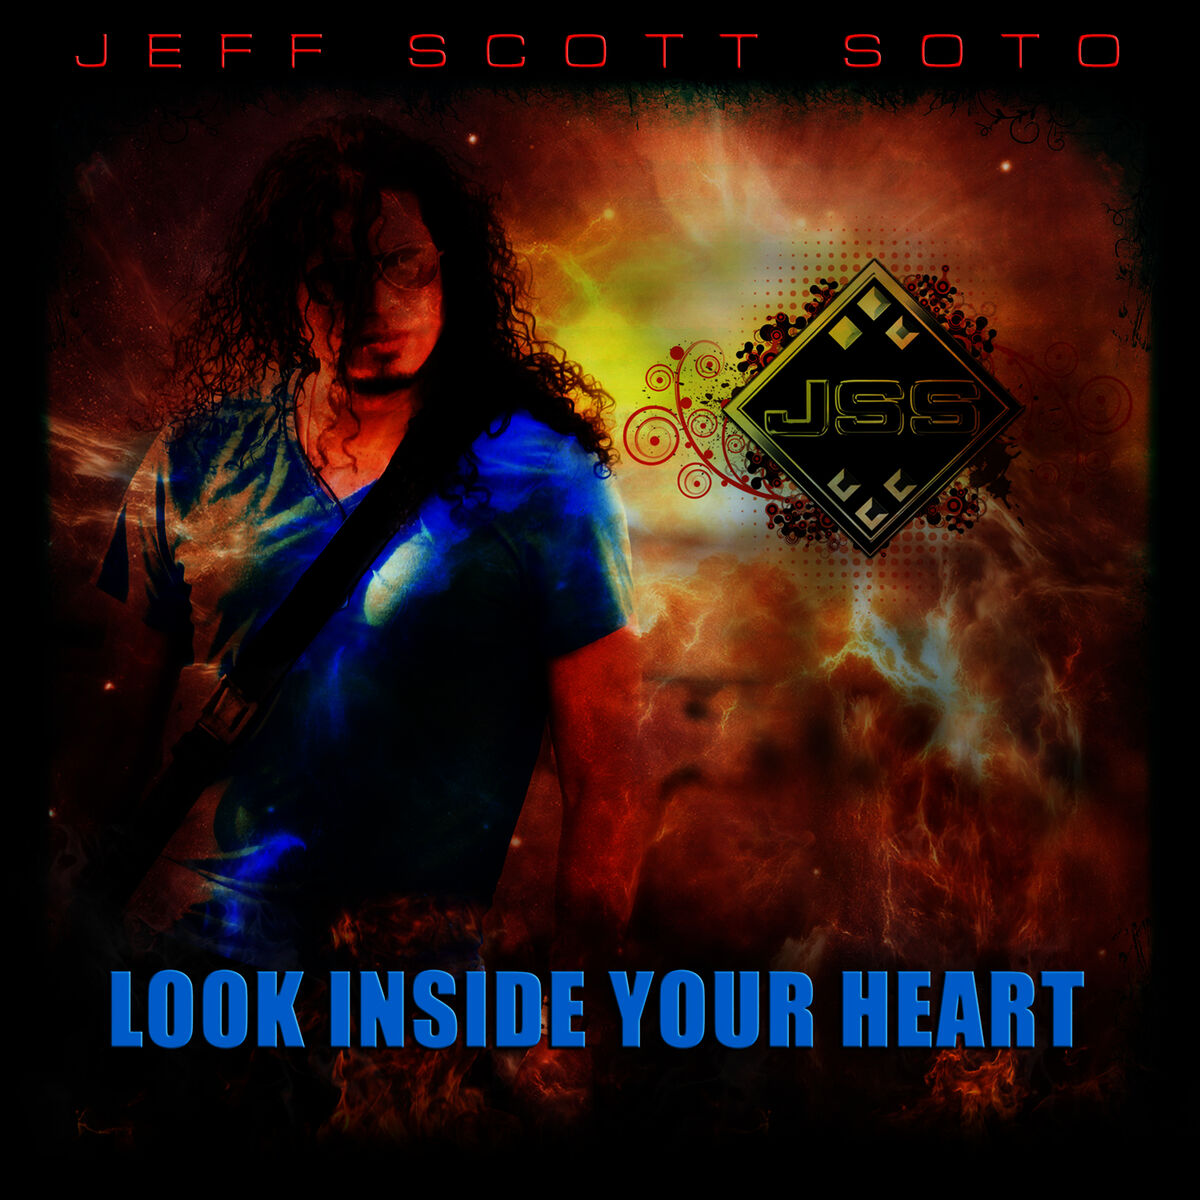 Jeff Scott Soto: albums